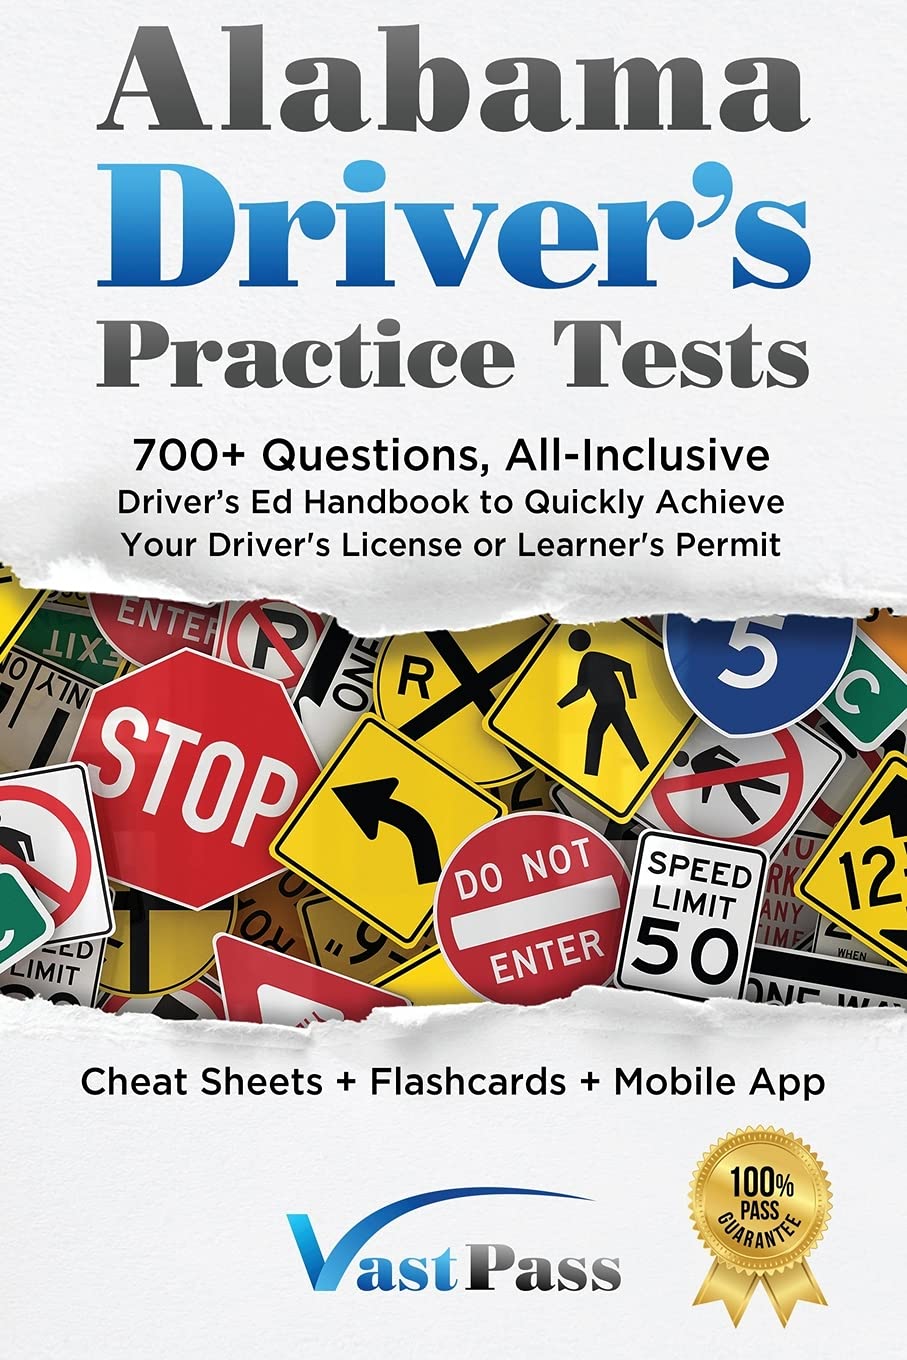 Alabama Driver's Practice Tests - SureShot Bookas Publishing LLC